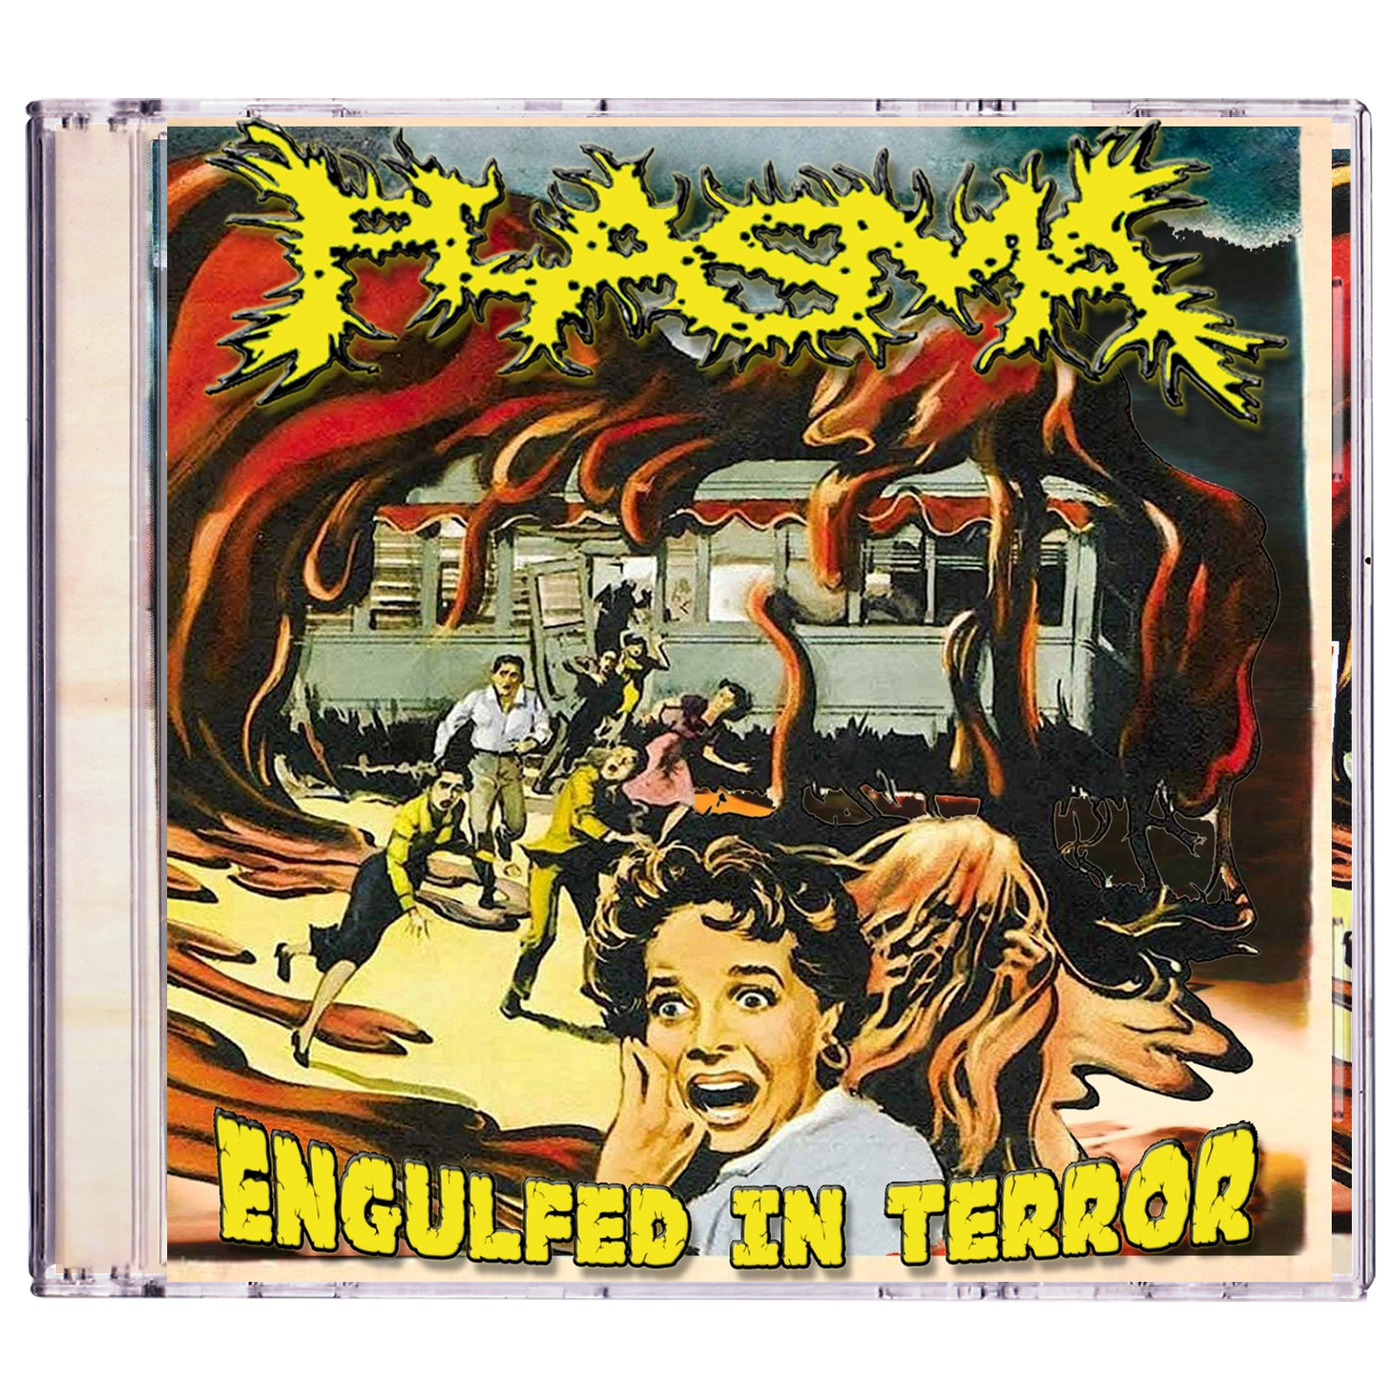 Plasma 'Engulfed In Terror' CD